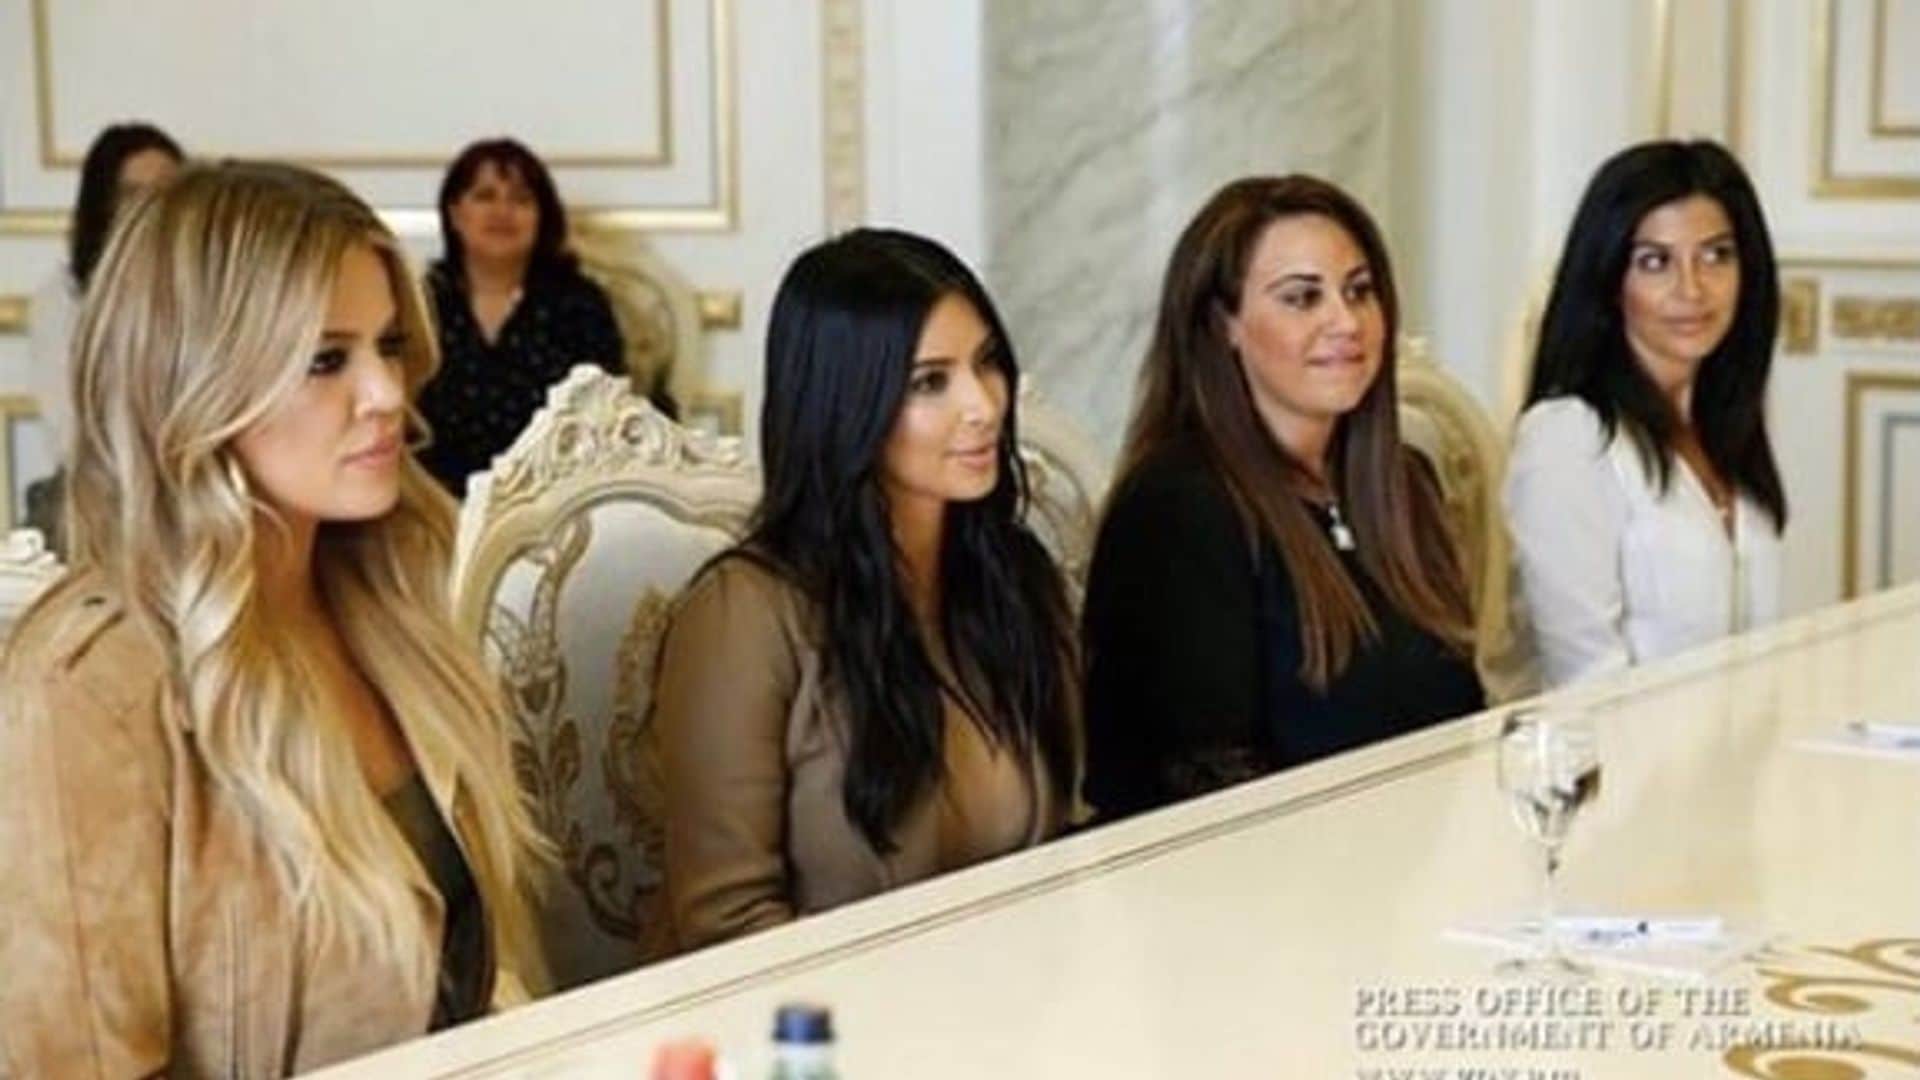 More Kardashians? Meet Kim, Kourtney and Khloe's three K-named cousins